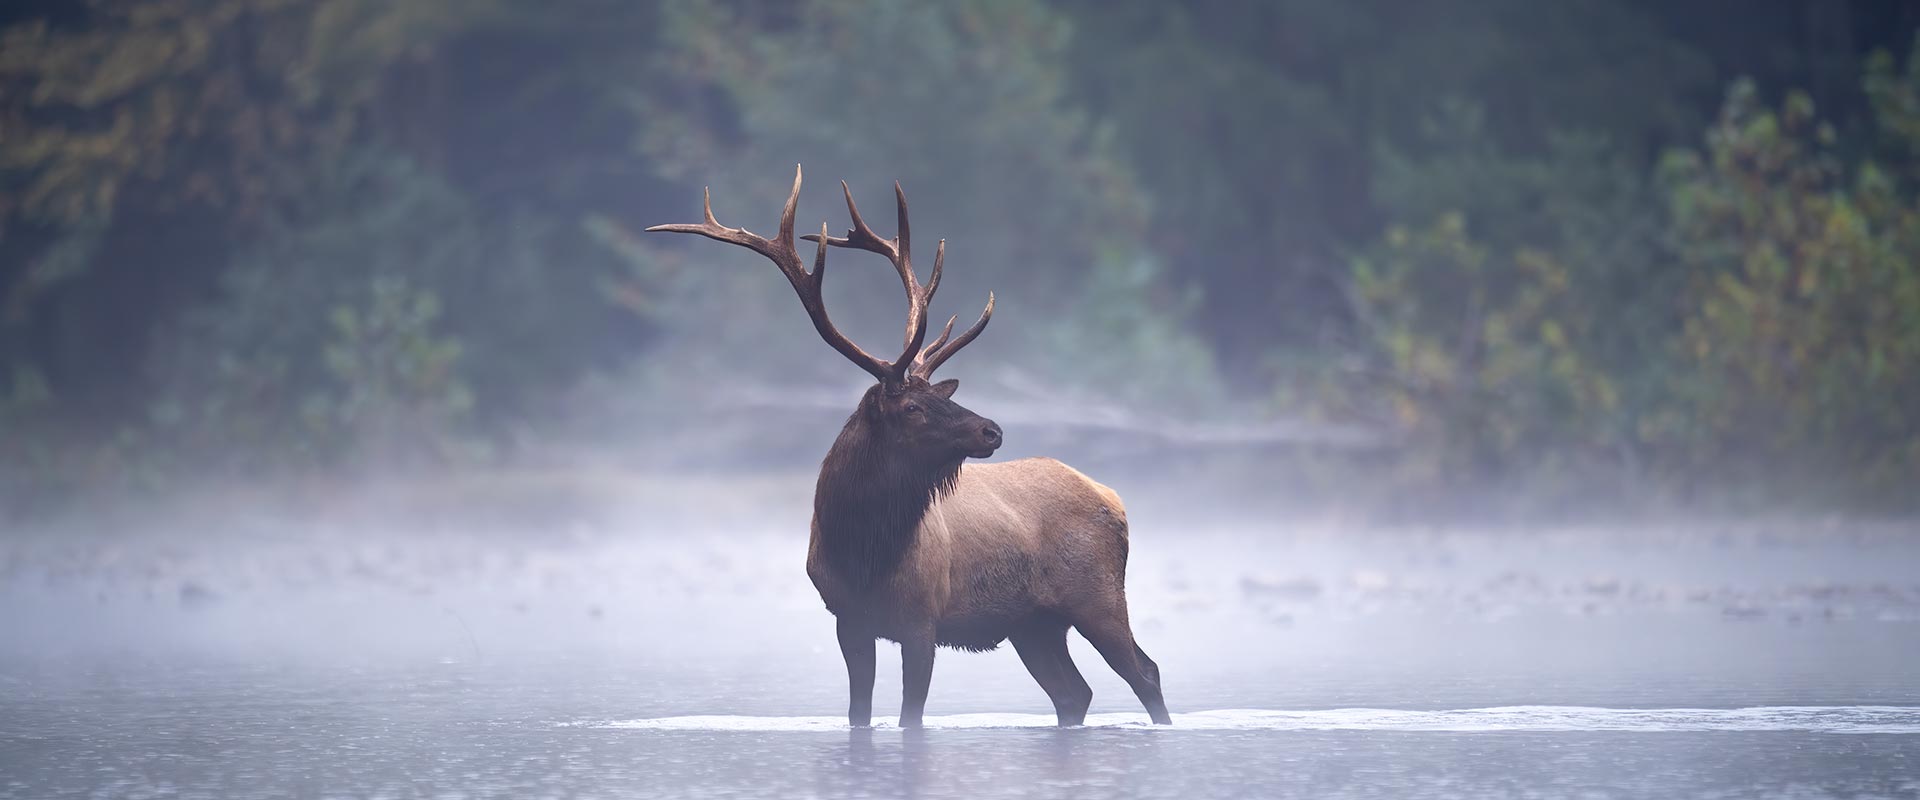 Large elk in a misty pool of water